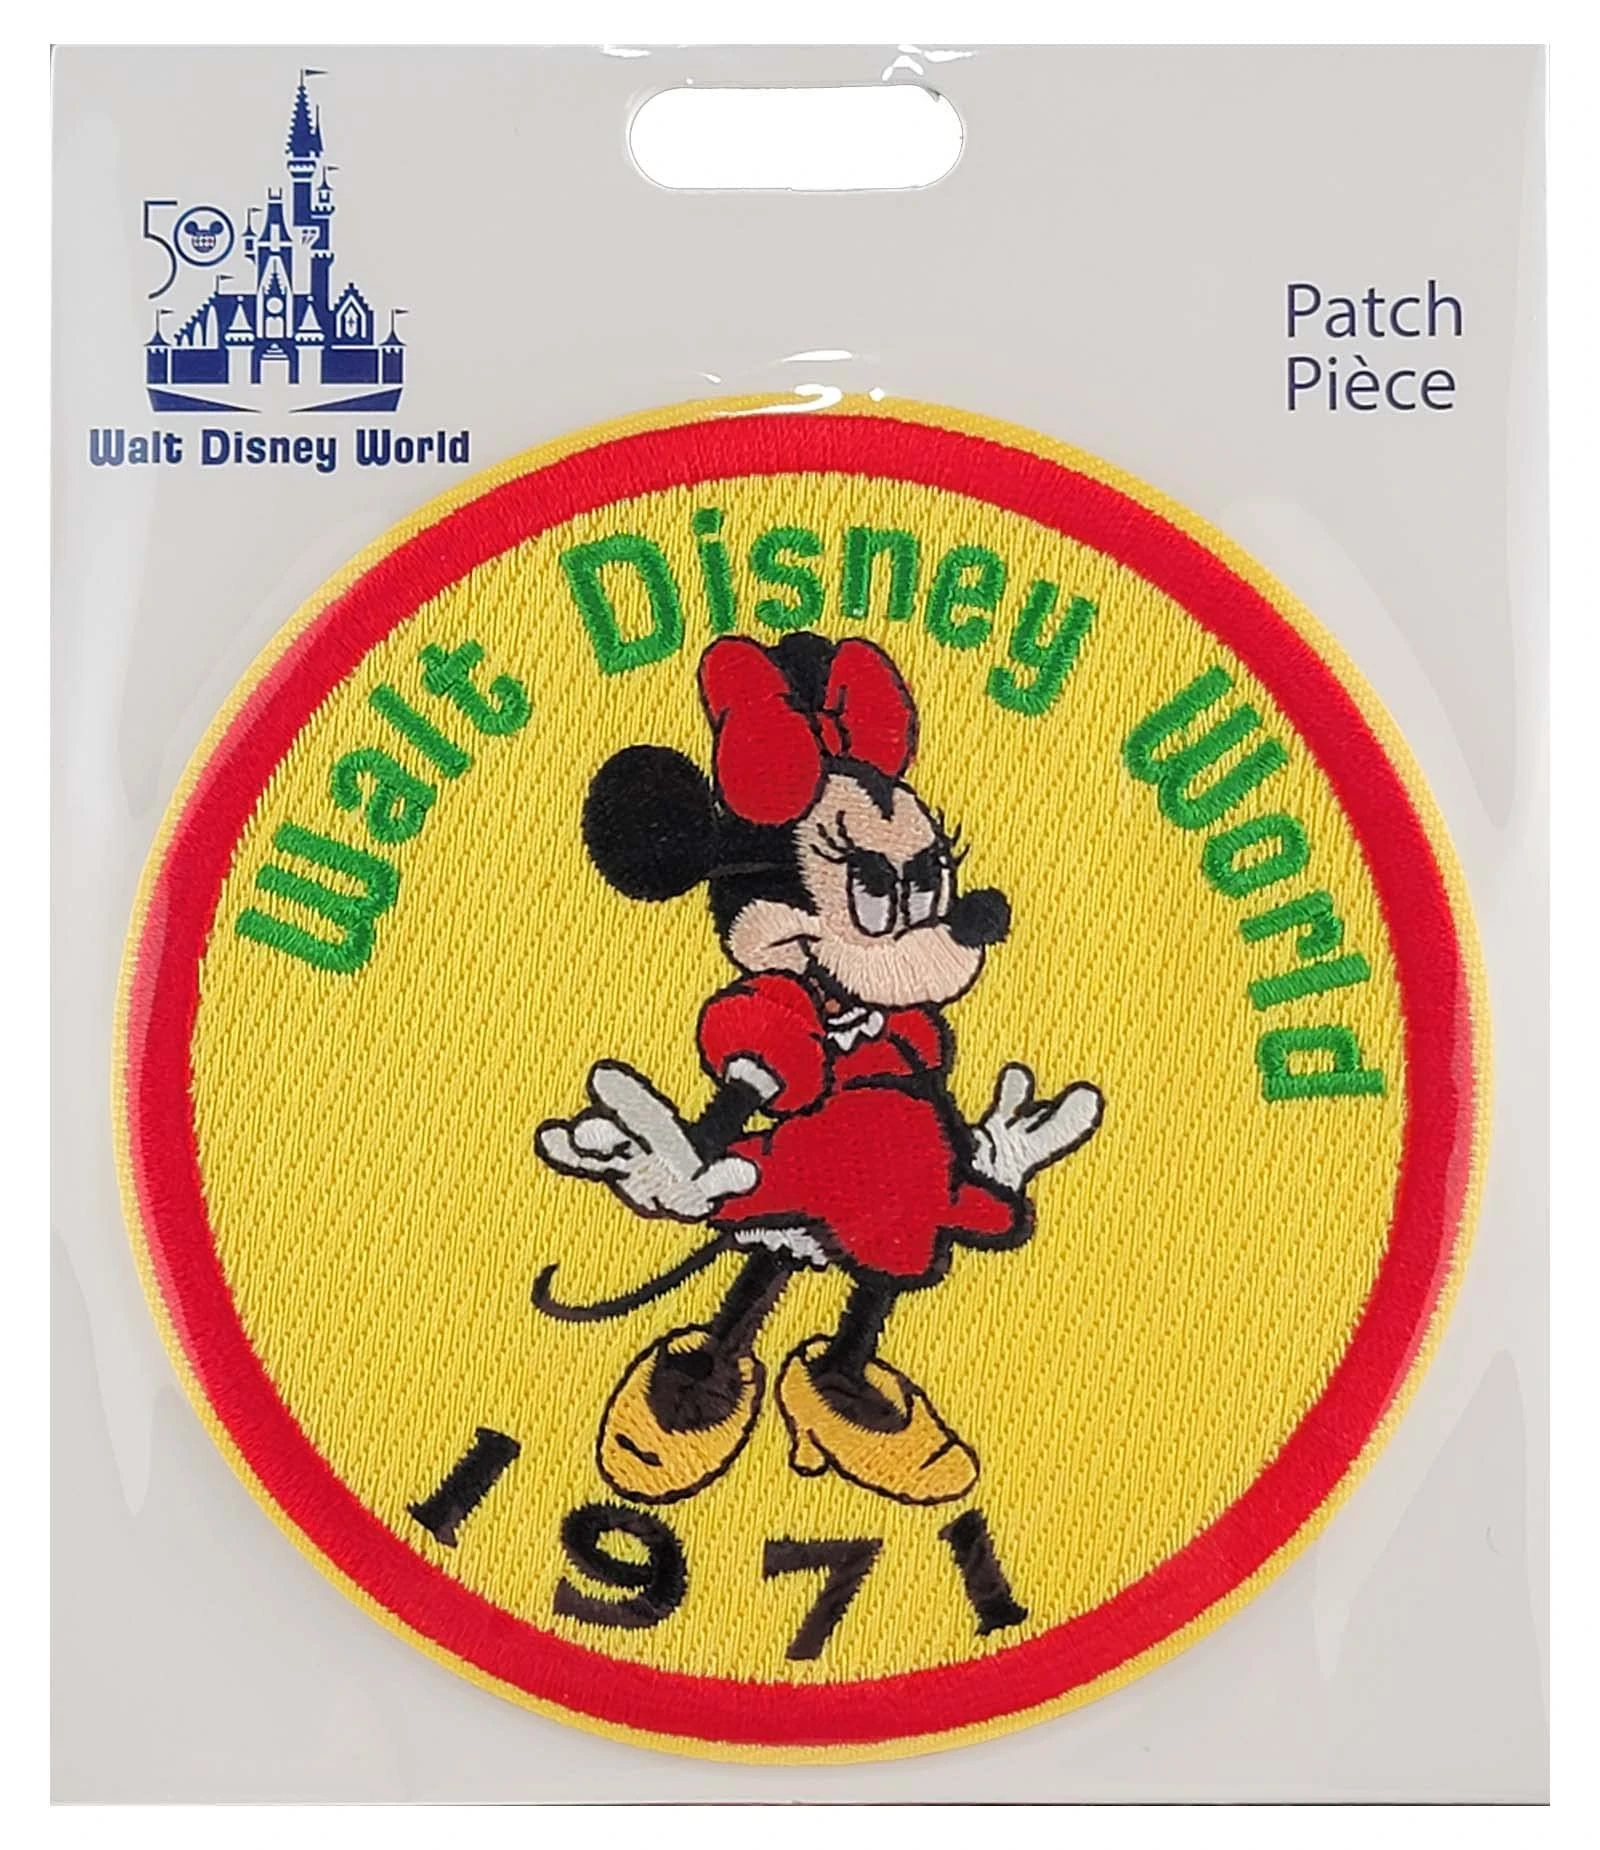 item Disney Parks Patch - Walt Disney World 50th Anniversary - Minnie Mouse Round - 1971 81pul84mbwljpg